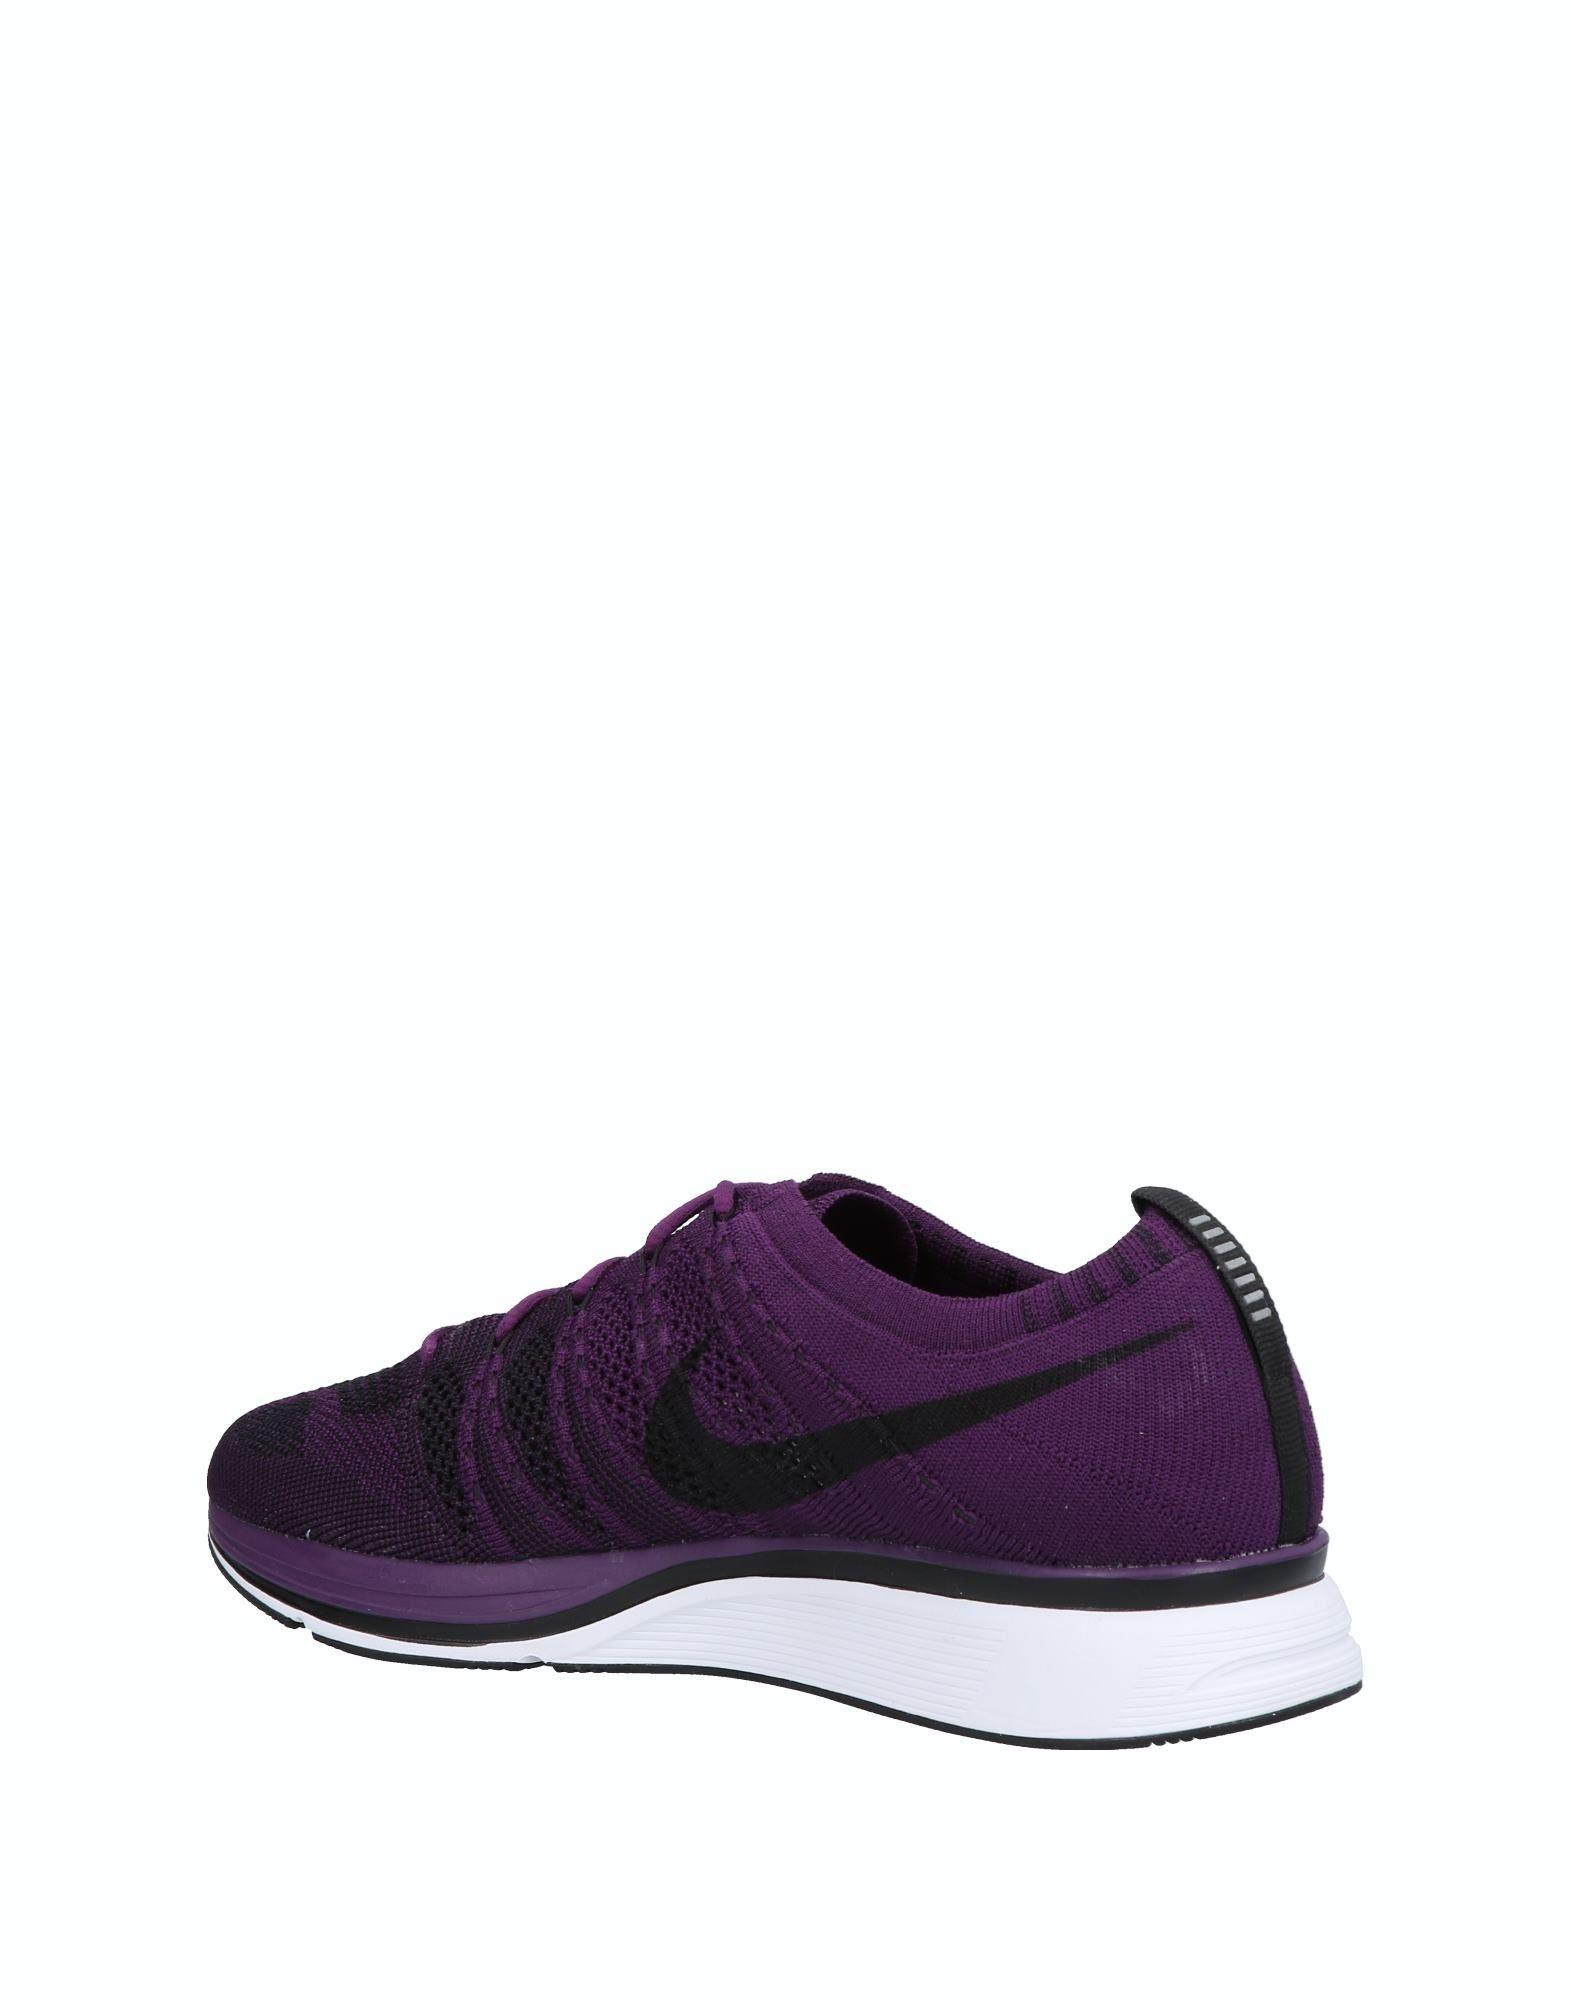 Nike Purple Sneakers For Men